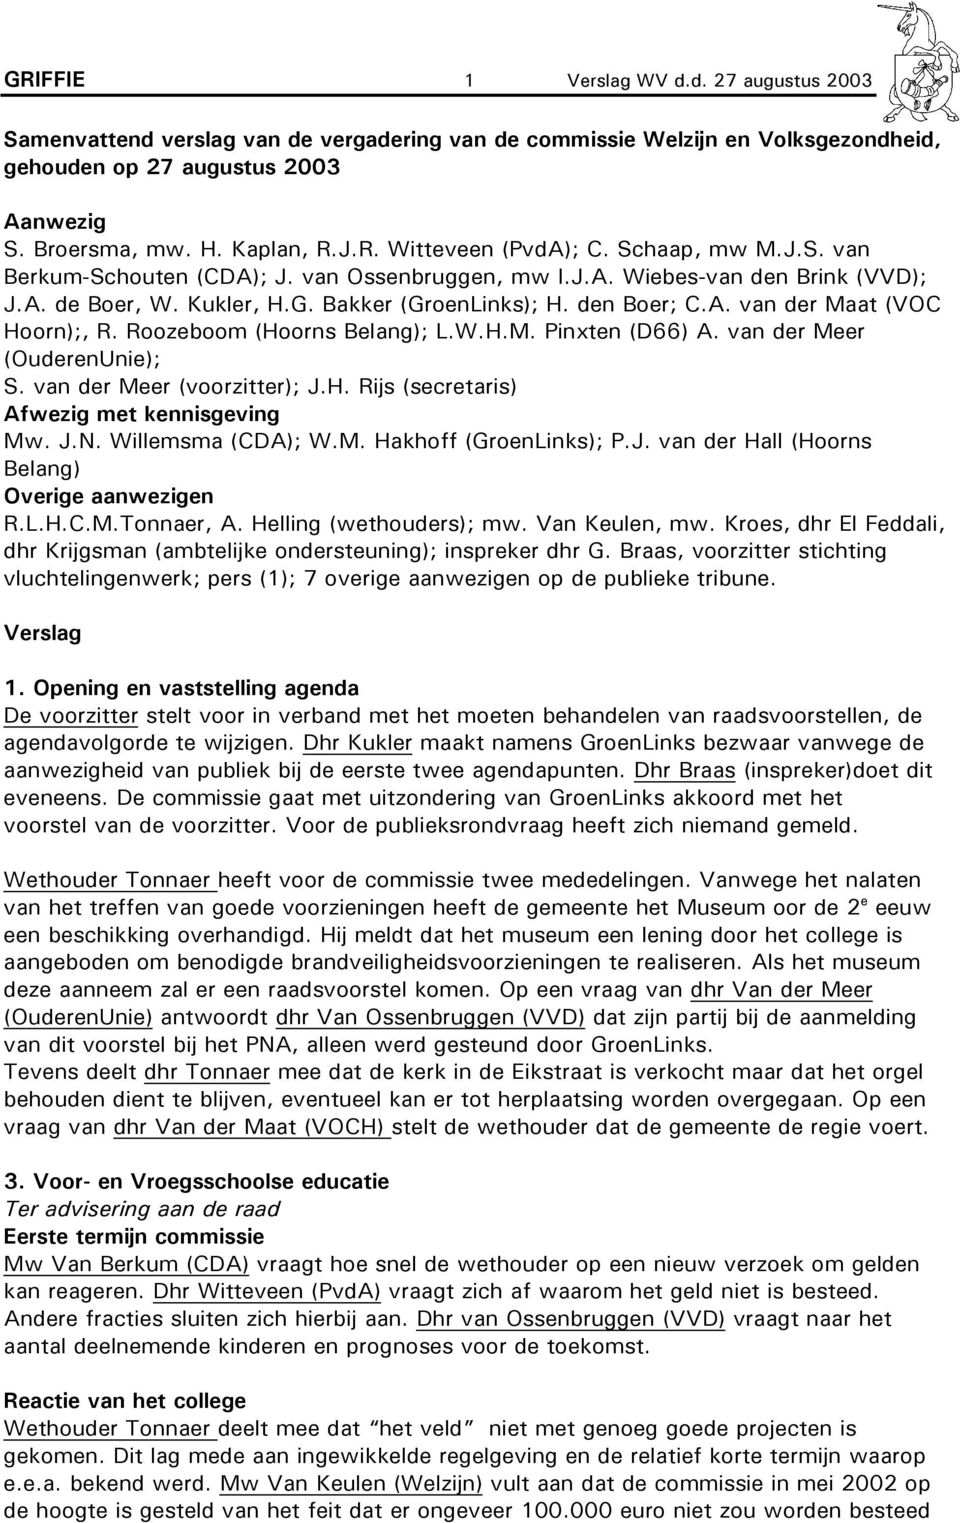 Roozeboom (Hoorns Belang); L.W.H.M. Pinxten (D66) A. van der Meer (OuderenUnie); S. van der Meer (voorzitter); J.H. Rijs (secretaris) Afwezig met kennisgeving Mw. J.N. Willemsma (CDA); W.M. Hakhoff (GroenLinks); P.